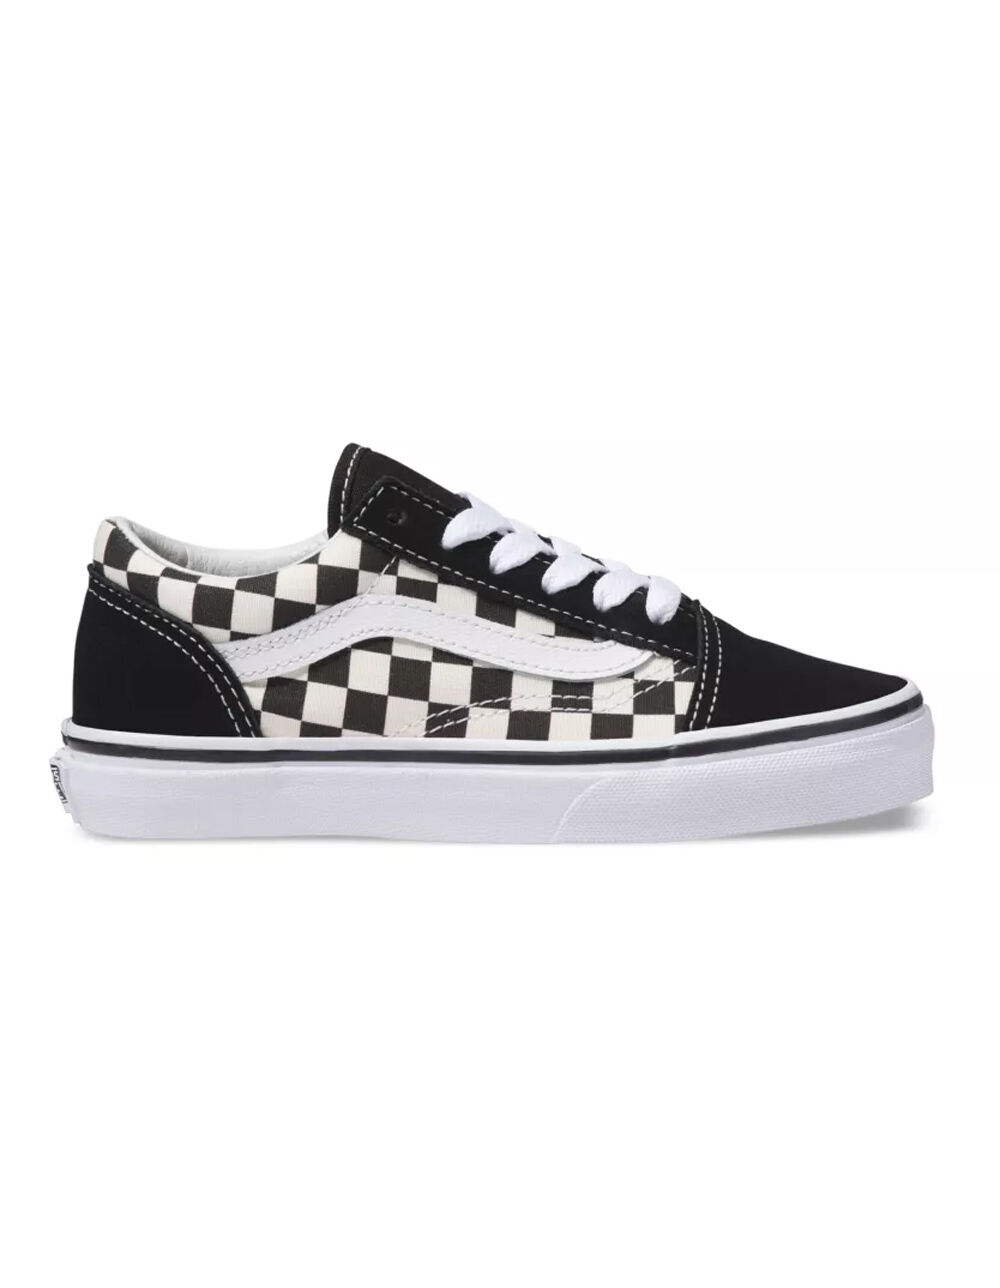 VANS Checkerboard Primary Old Skool Black & White Kids Shoes - CHECK | Tillys